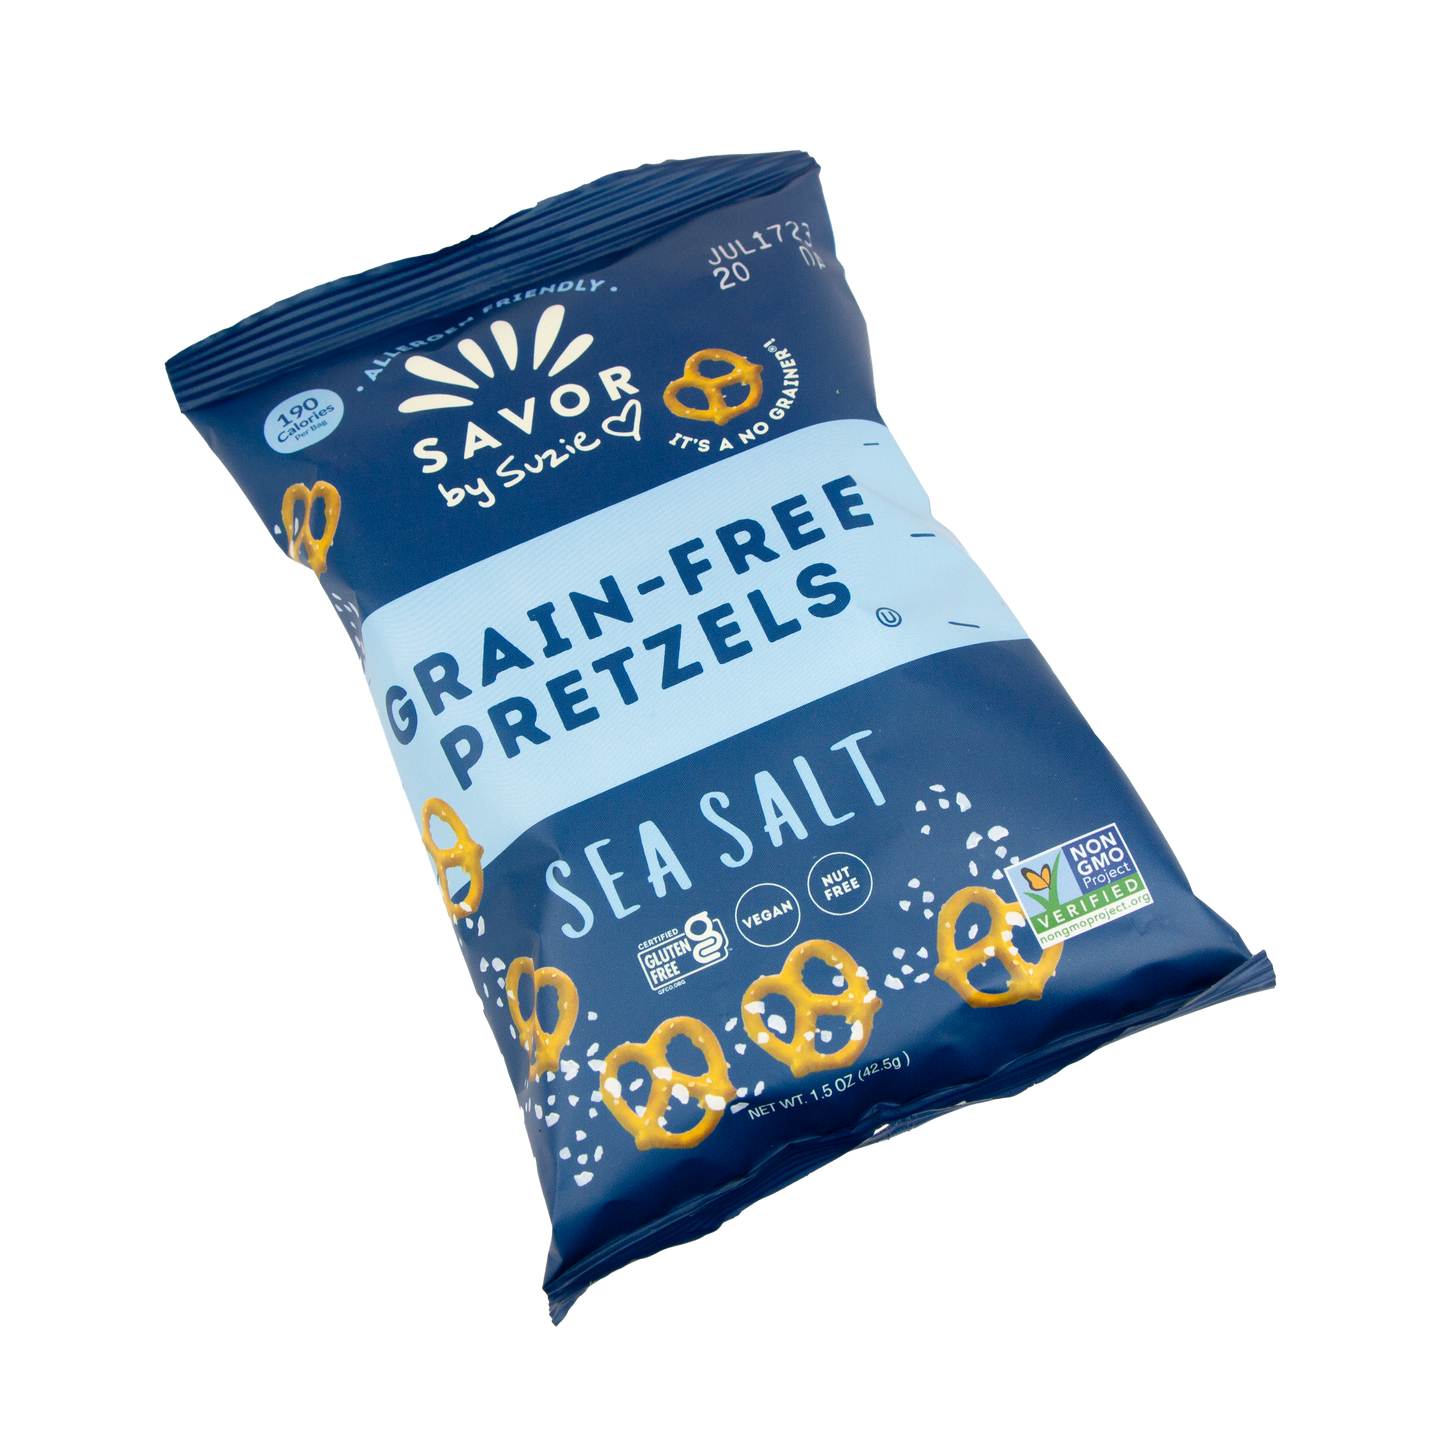 Savor by Suzie - Grain Free Pretzels Sea Salt (1.5 oz)